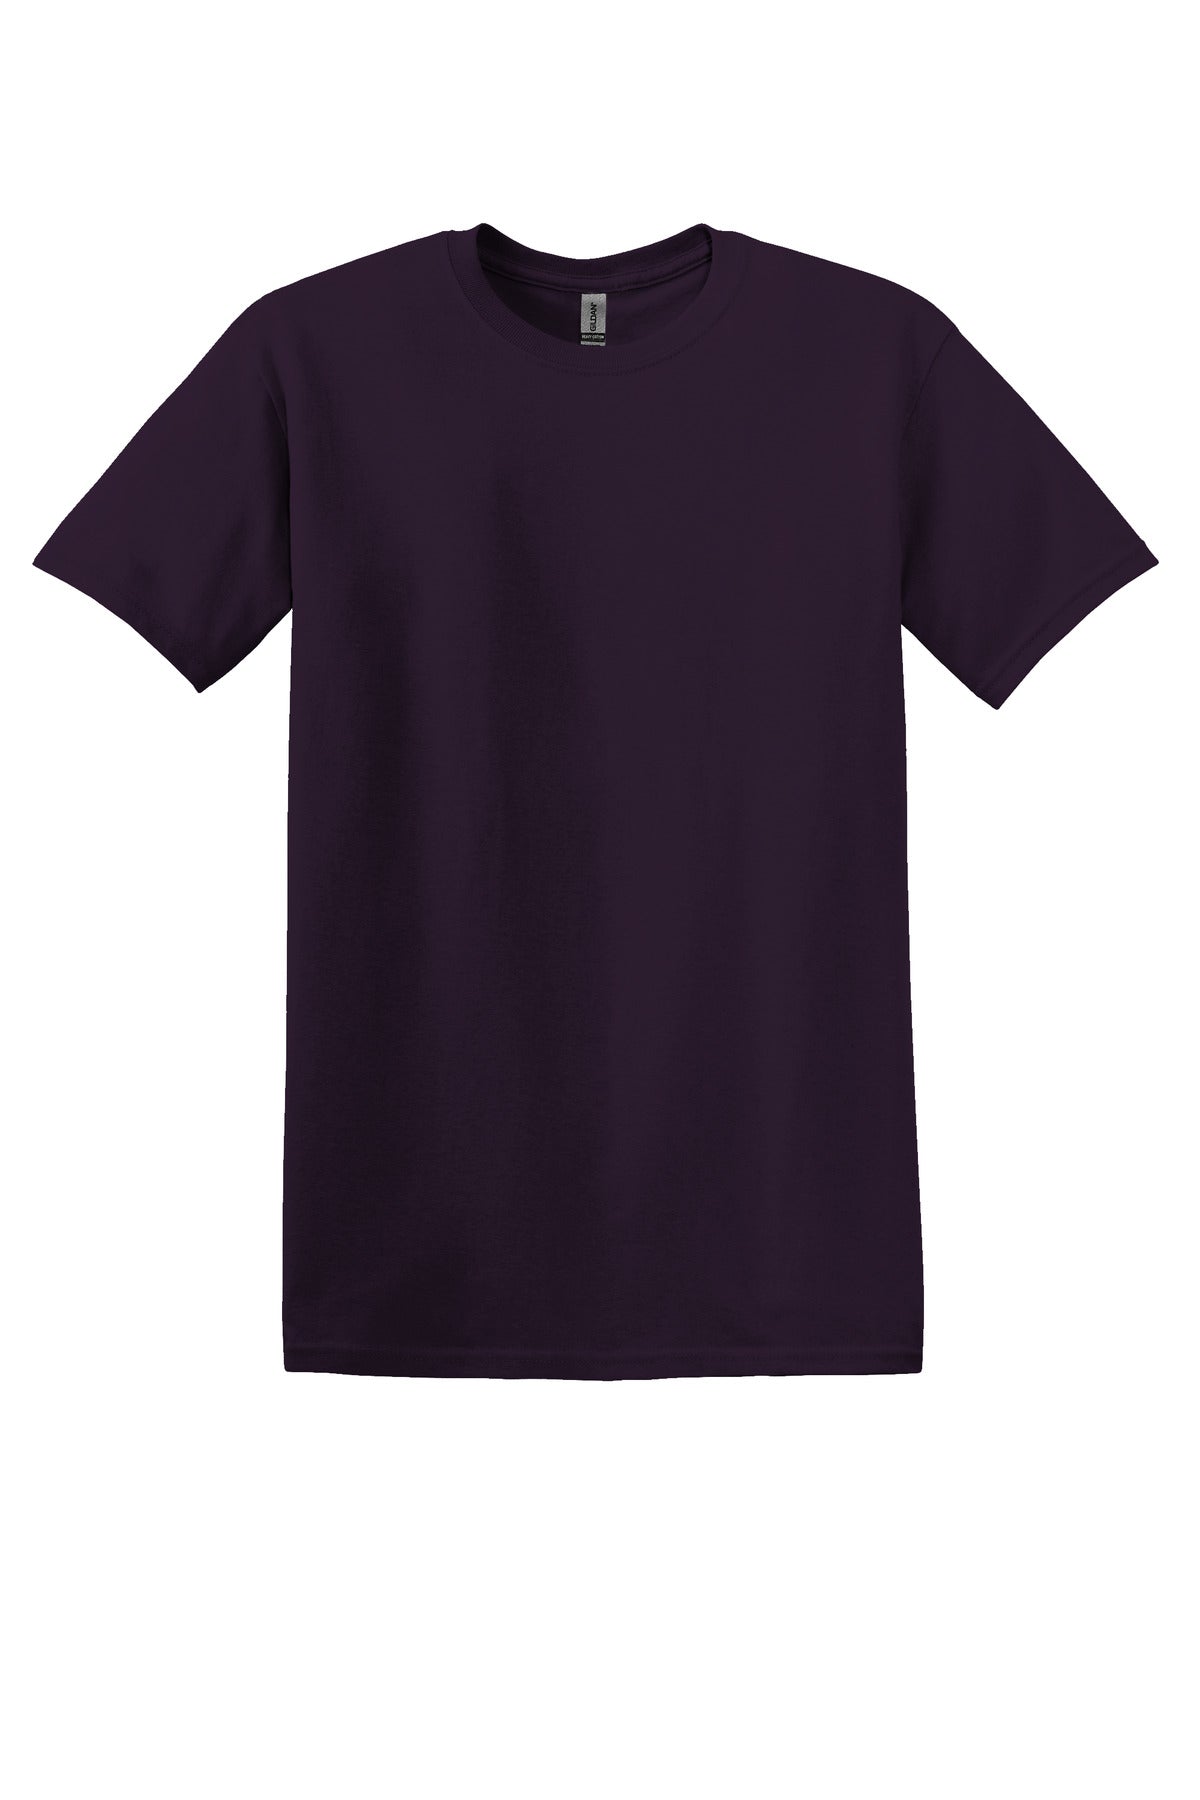 Gildan - Heavy Cotton 100% Cotton T-Shirt. 5000 - Blackberry